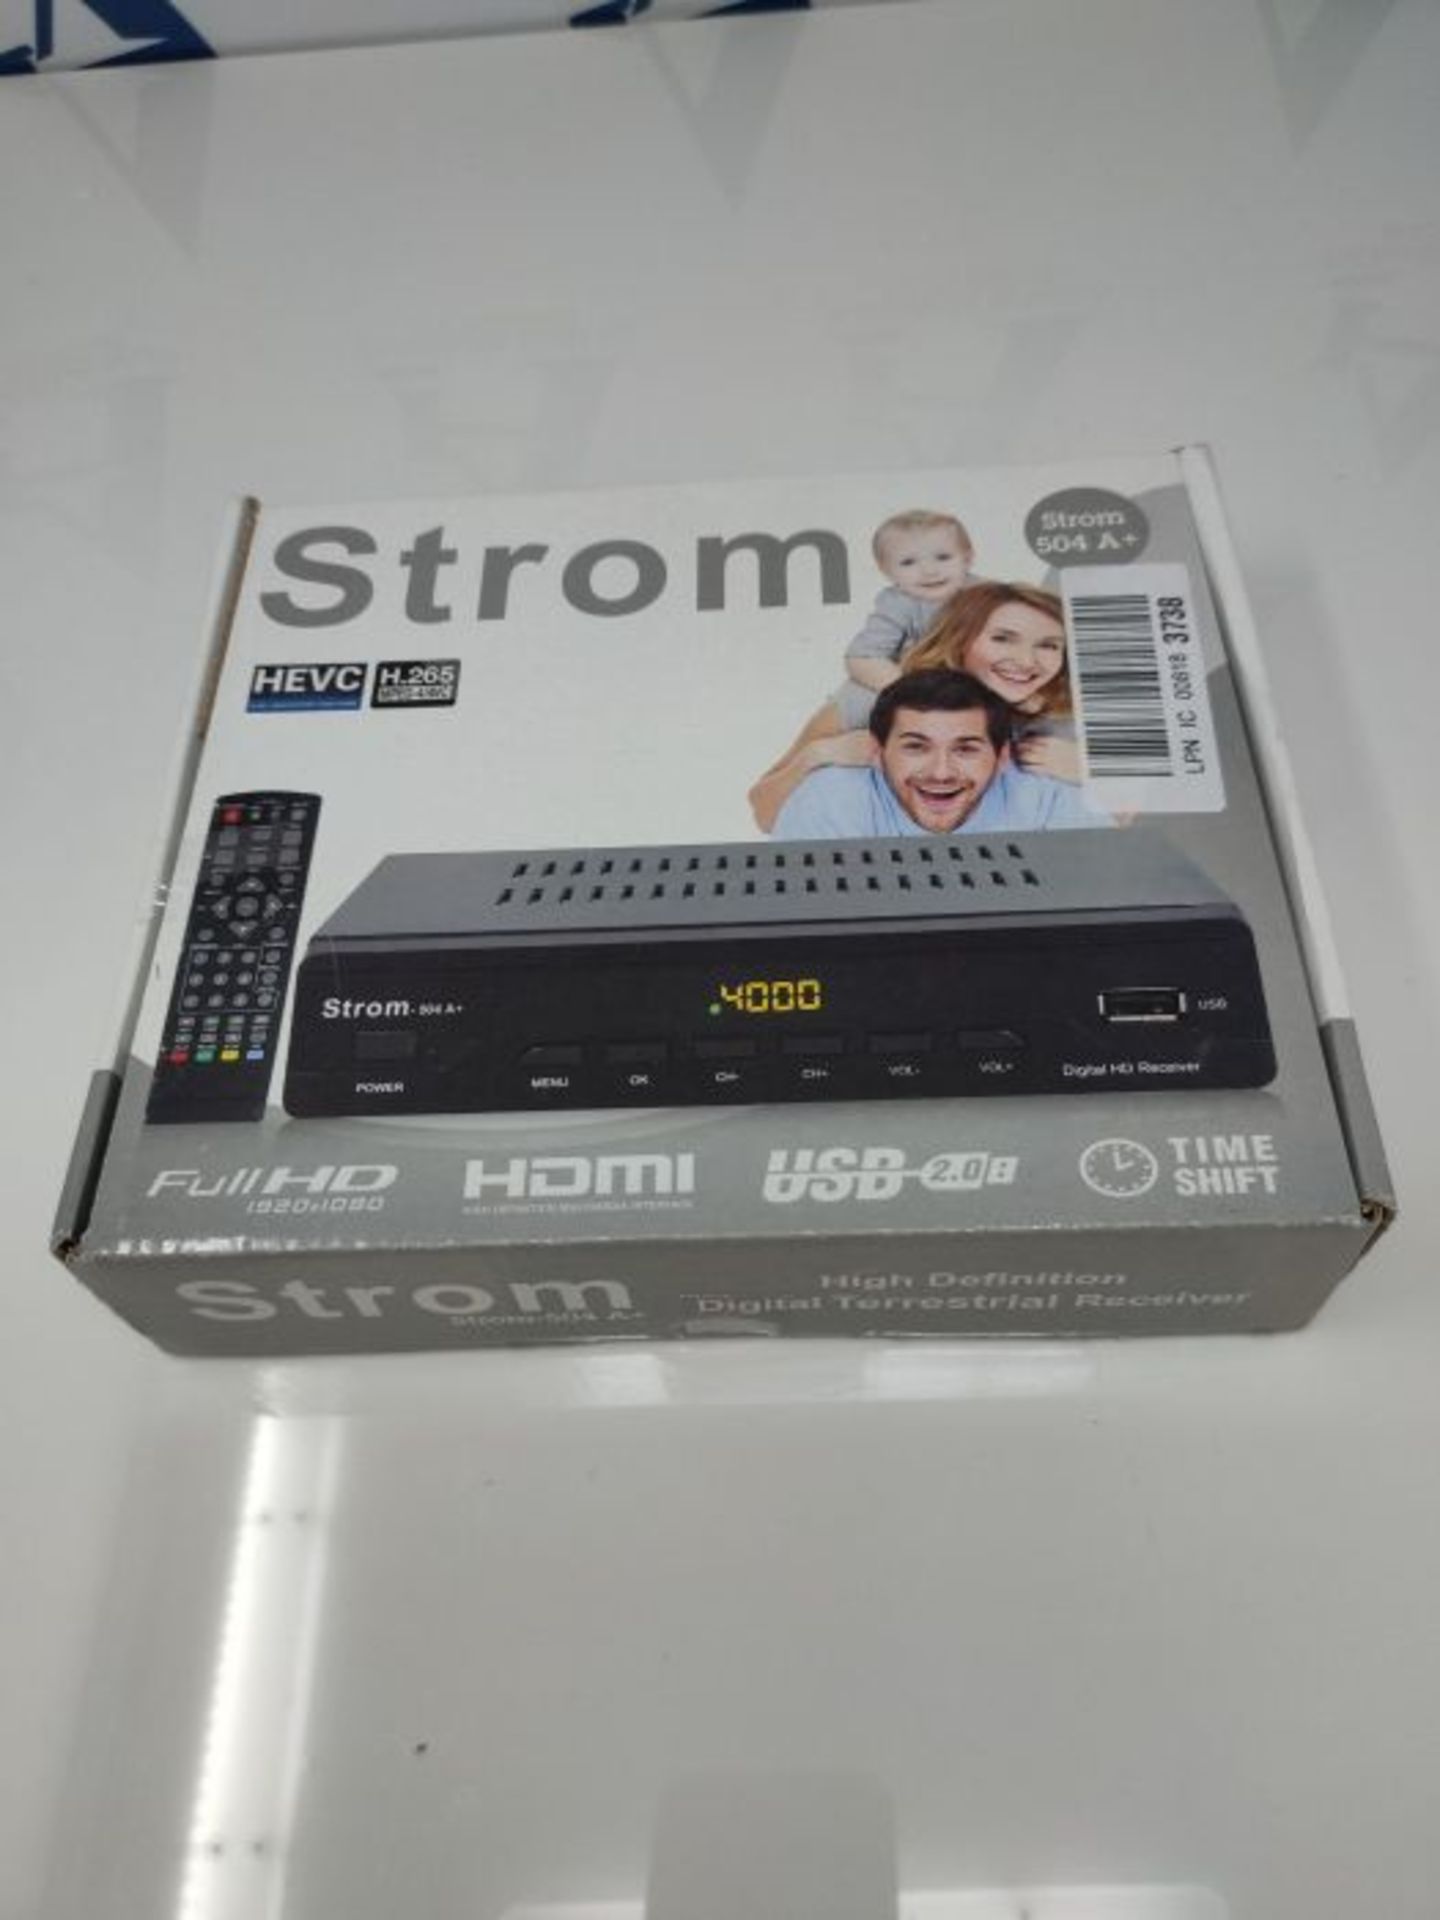 Strom 504 A+ DÃ©codeur TNT Full HD -DVB-T2 - Compatible HEVC264 - (HDMI,PÃ©ritel, - Image 2 of 3